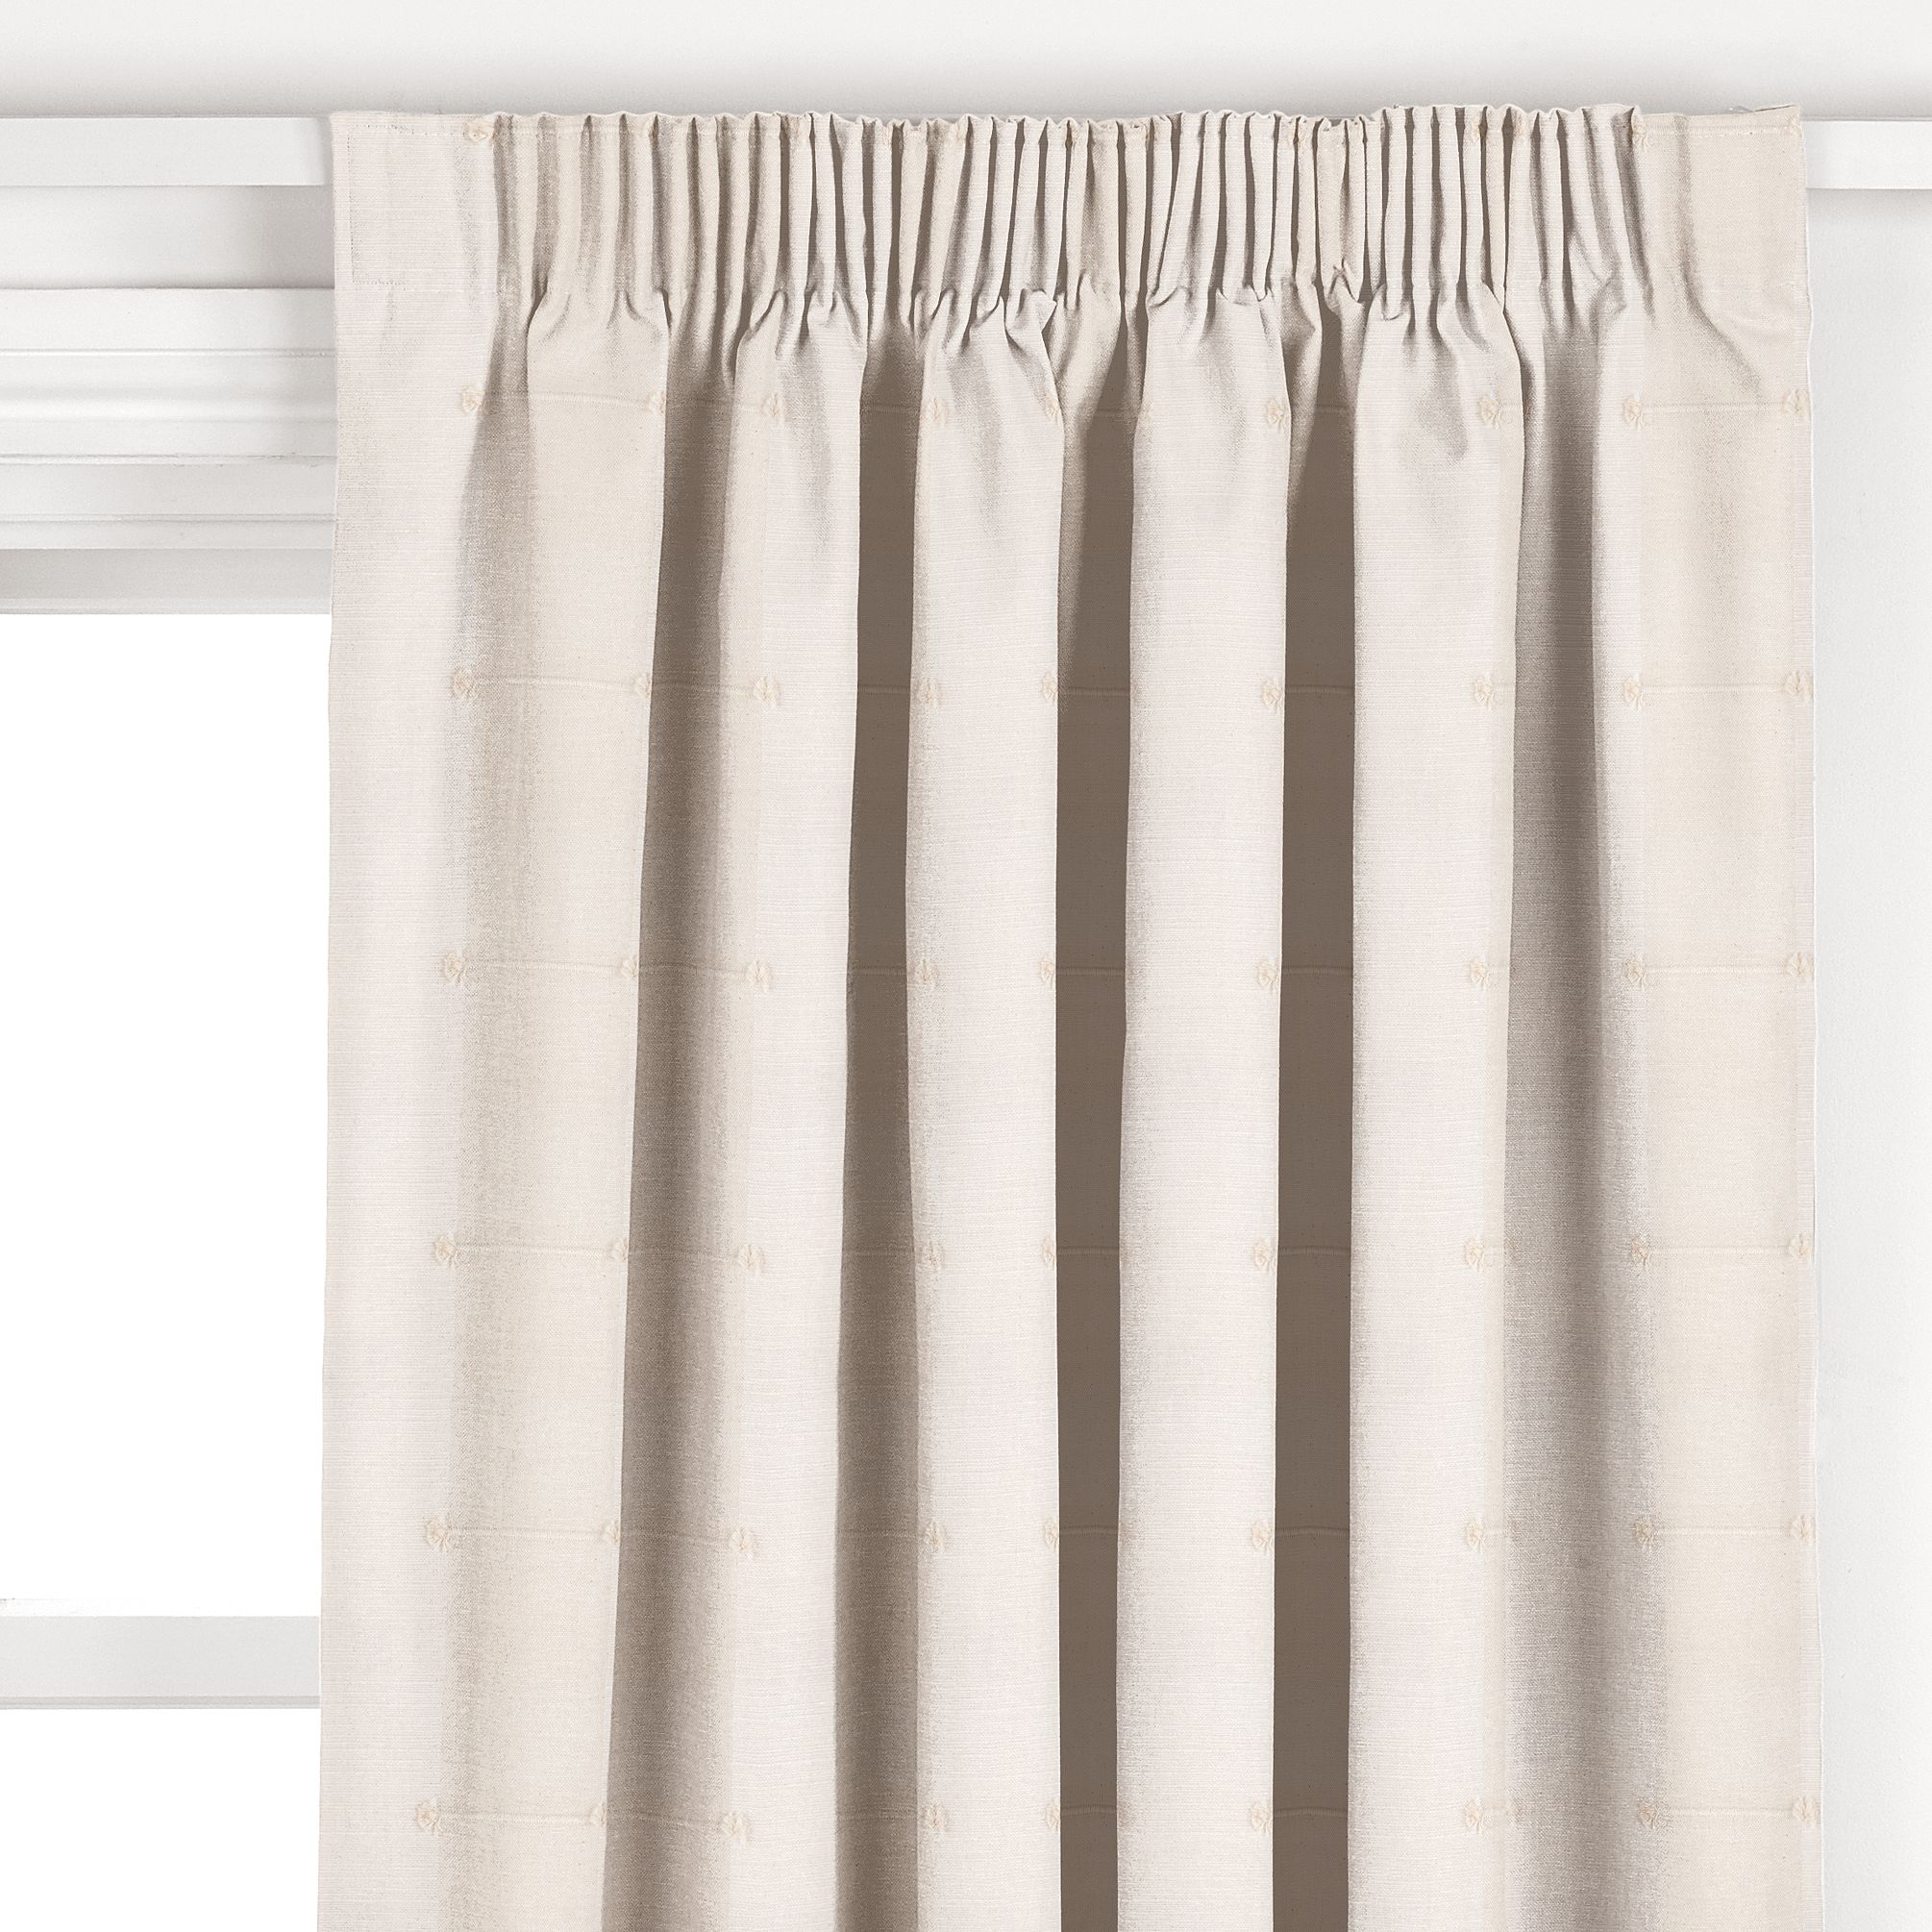 John Lewis Sierra Pencil Pleat Curtains,